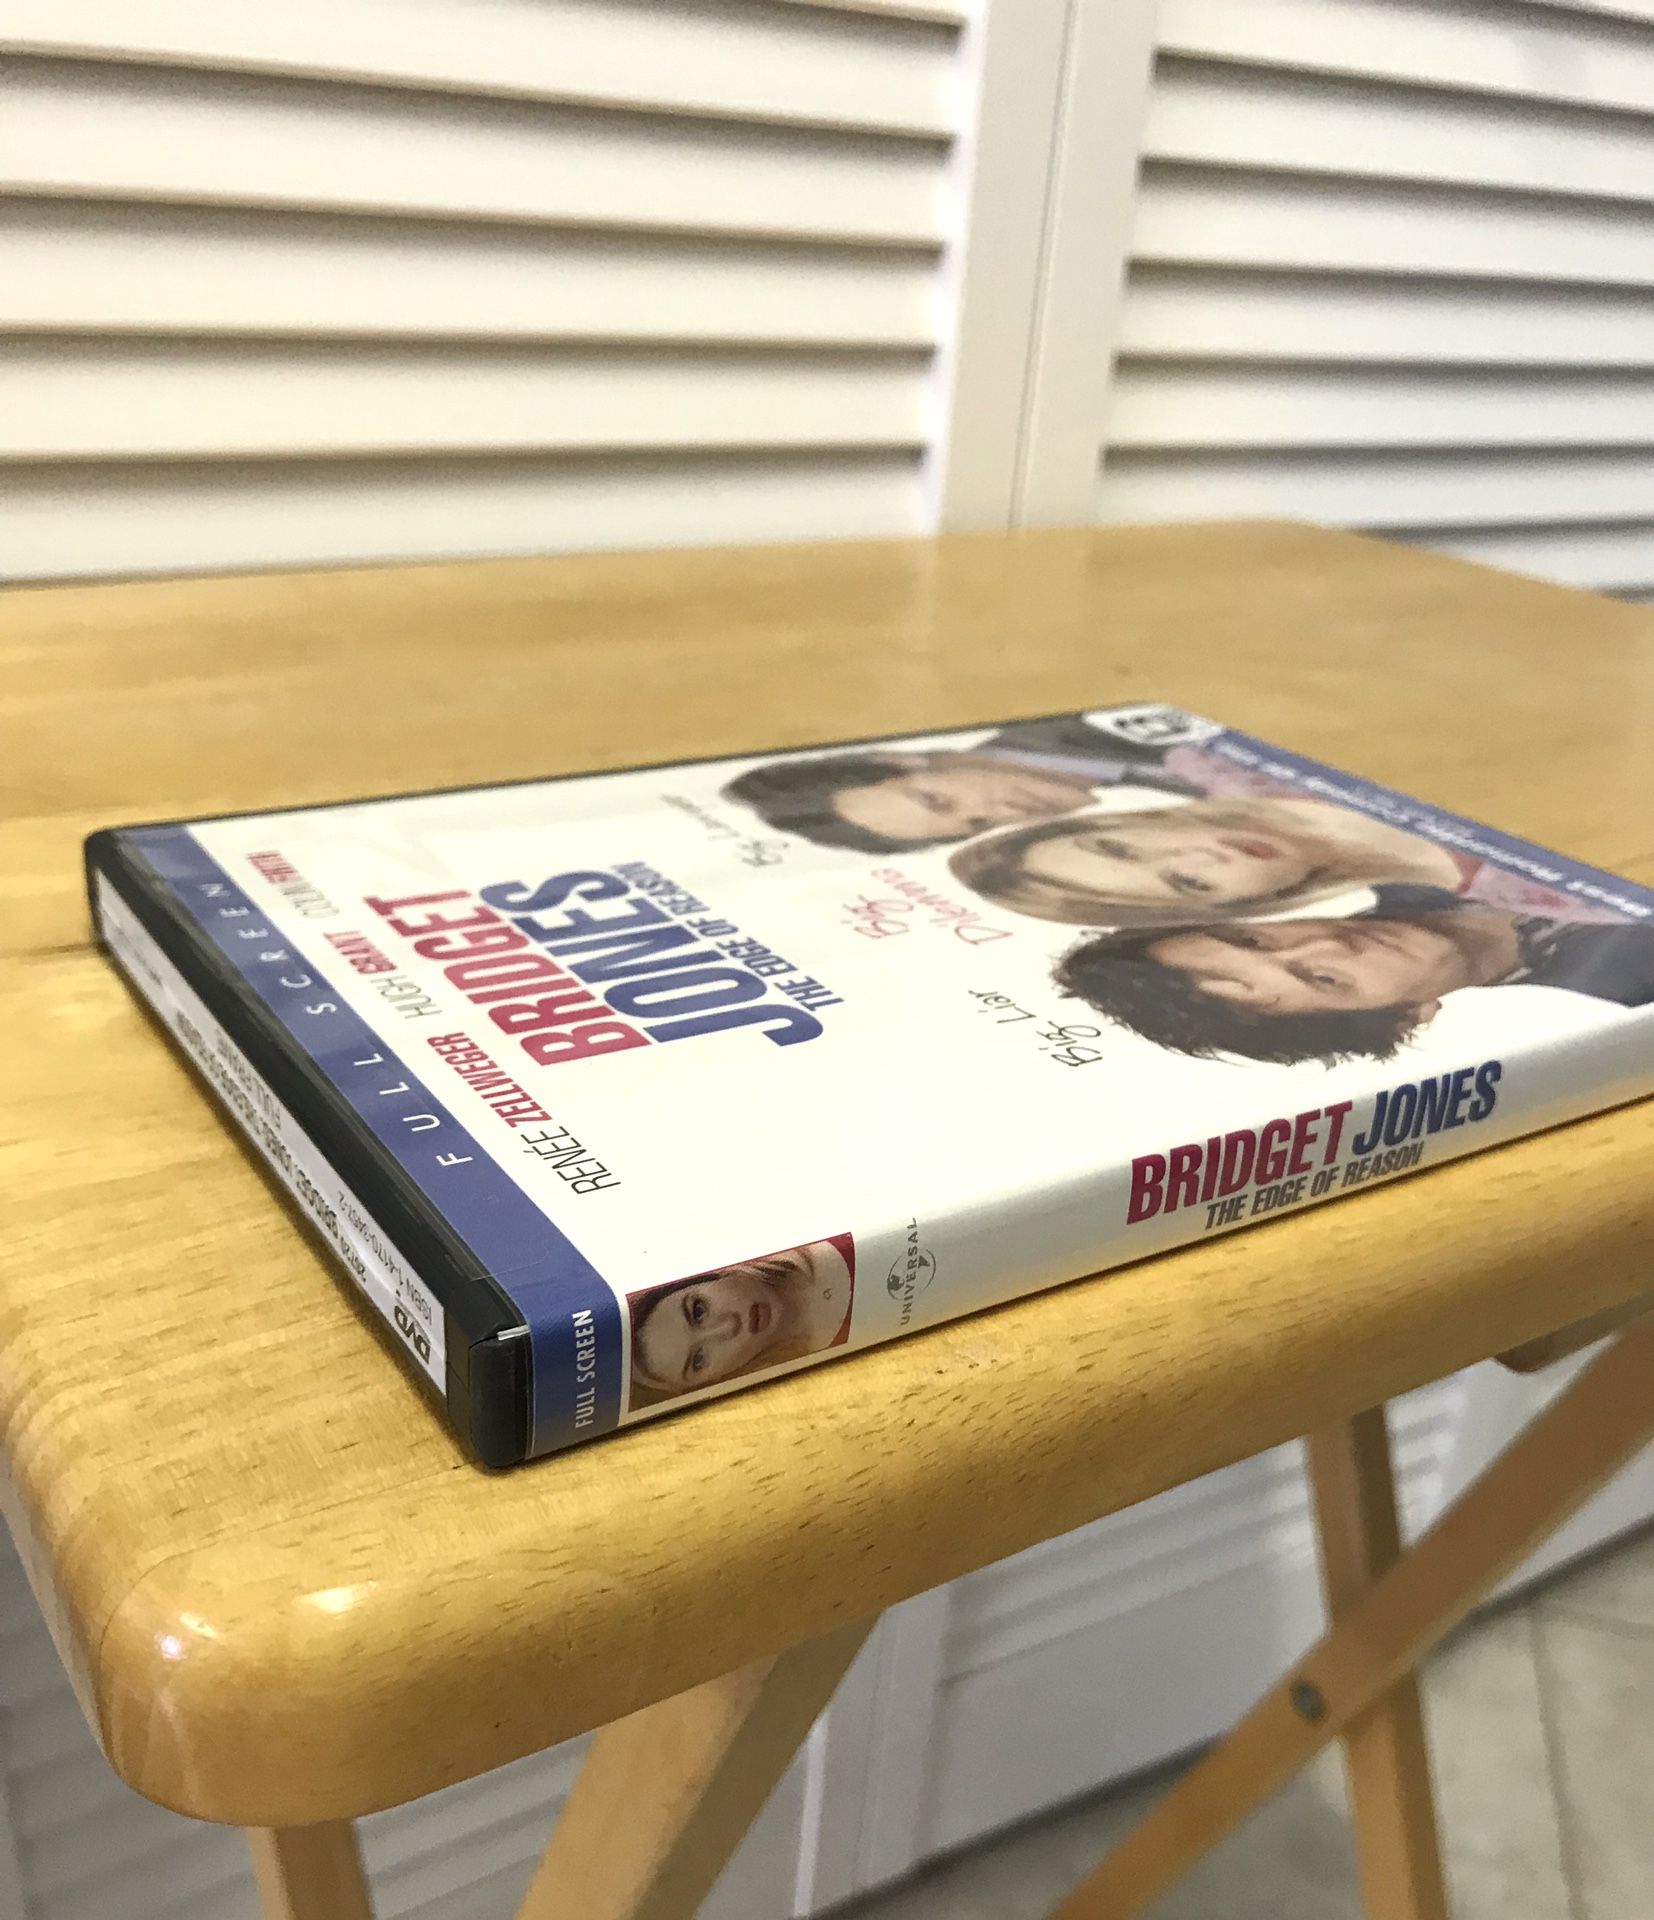 Bridget Jones DVD Full Screen With Zellweger, Grant, & Firth 